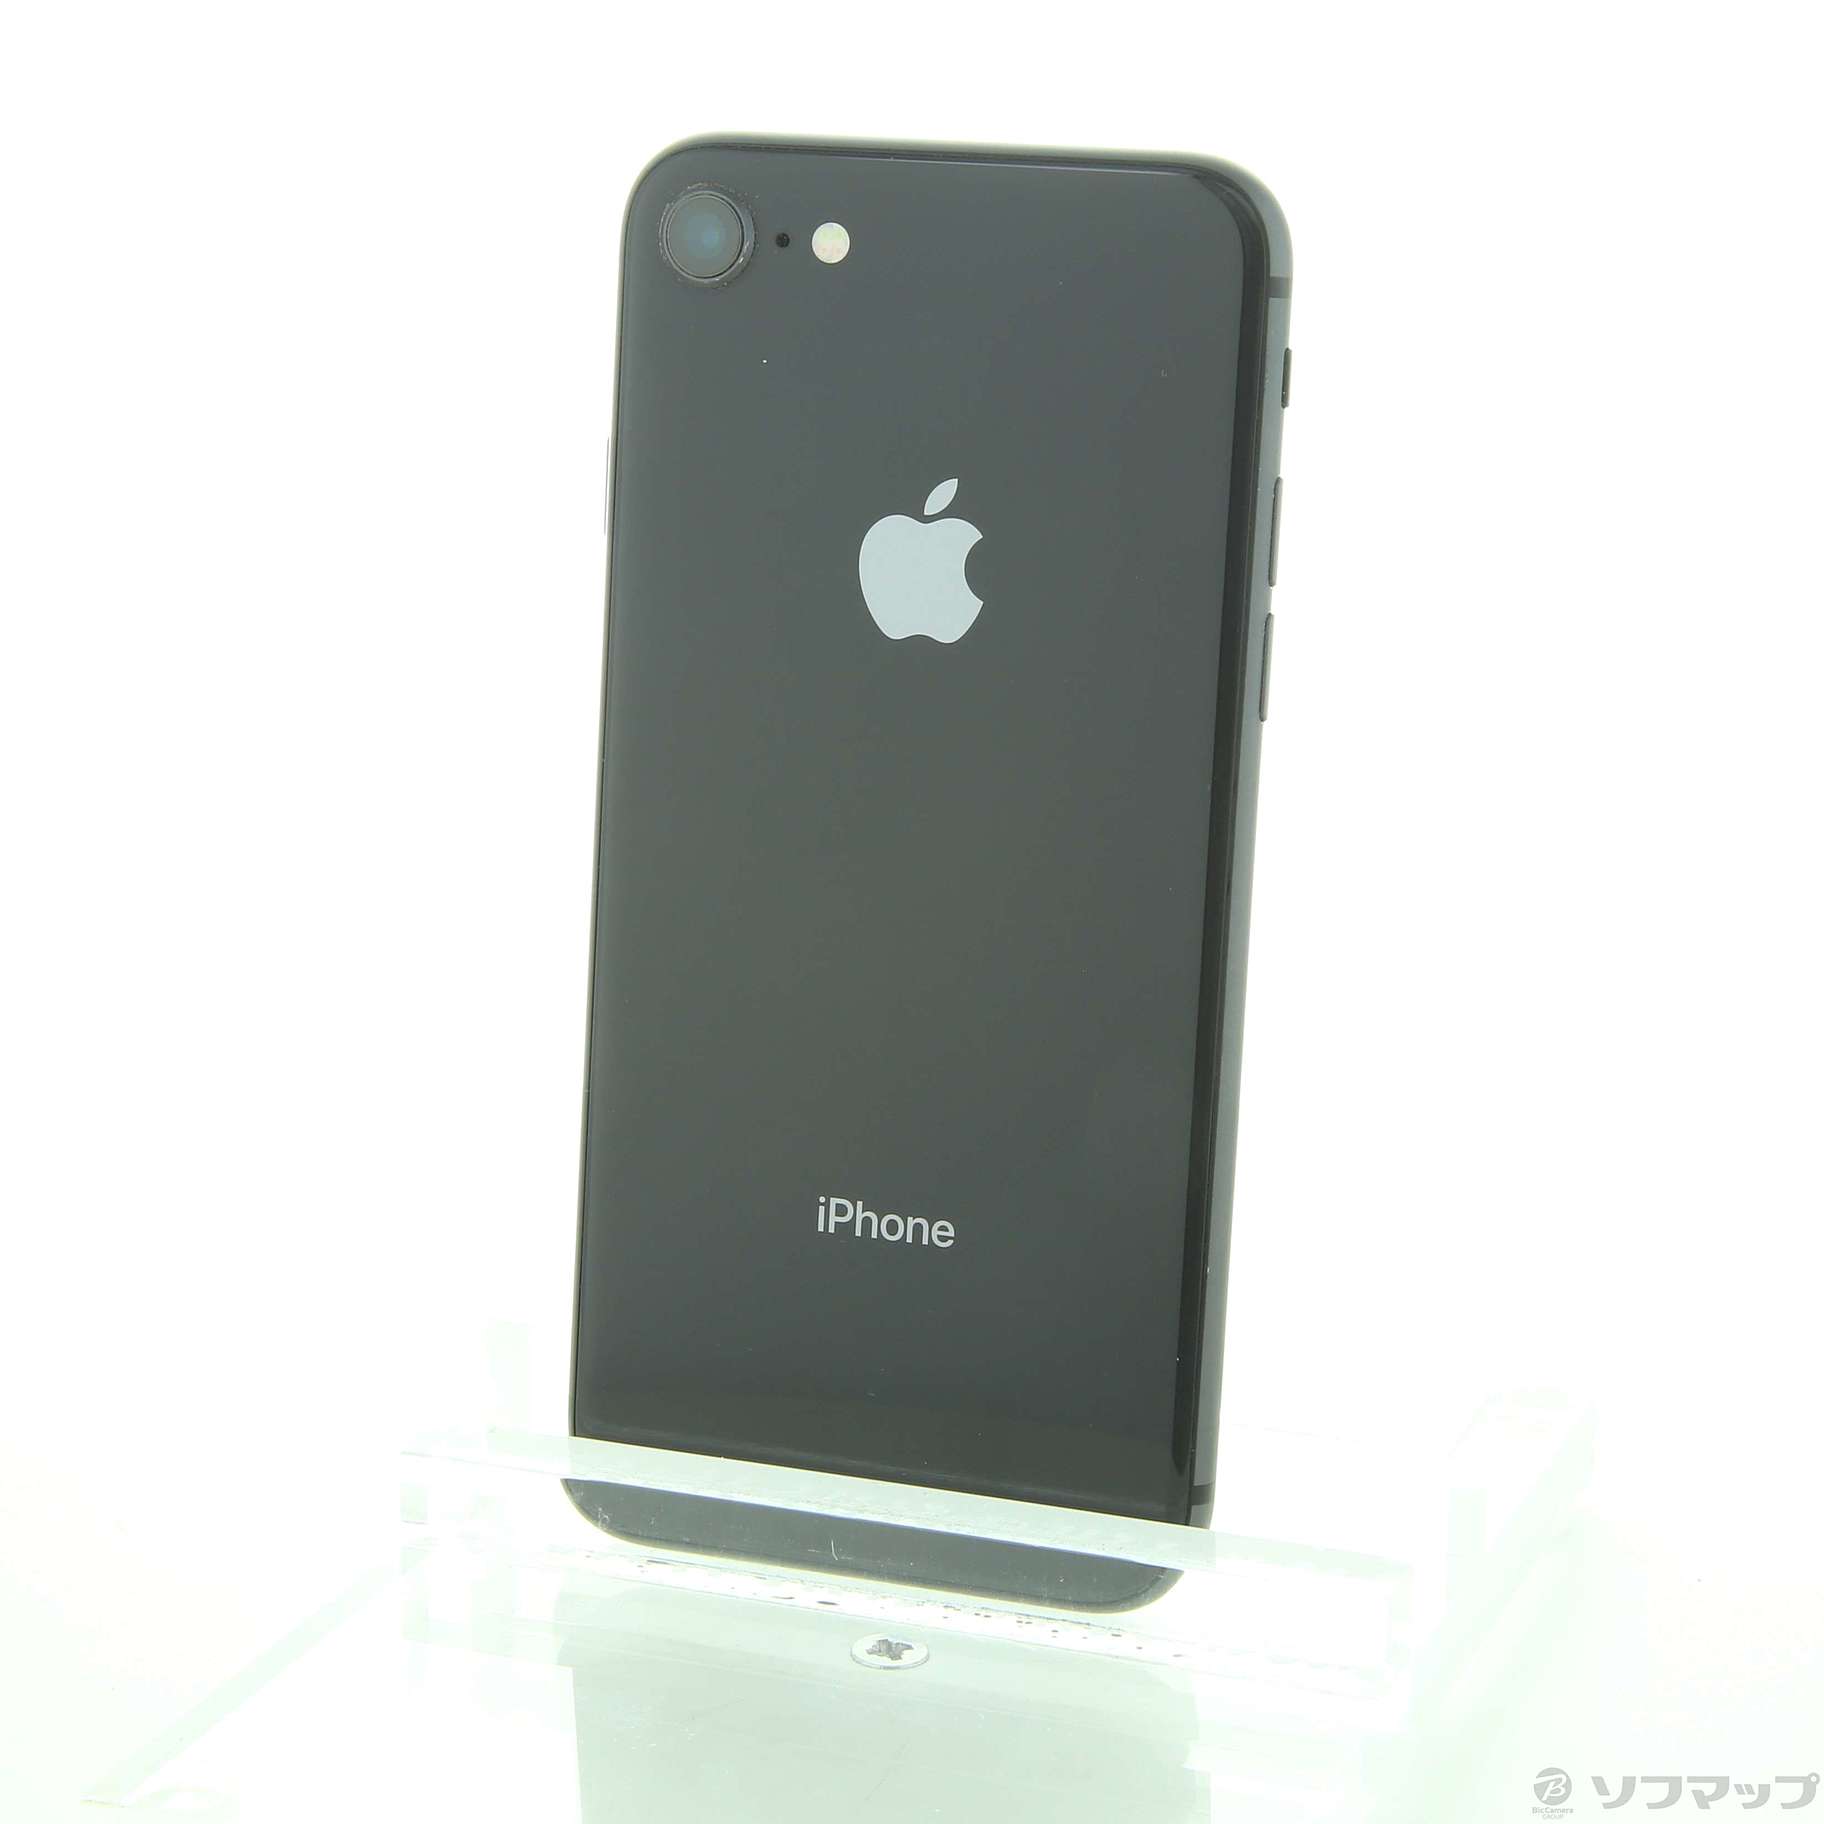 iPhone8 スペースグレイ 64GB docomo - スマートフォン本体